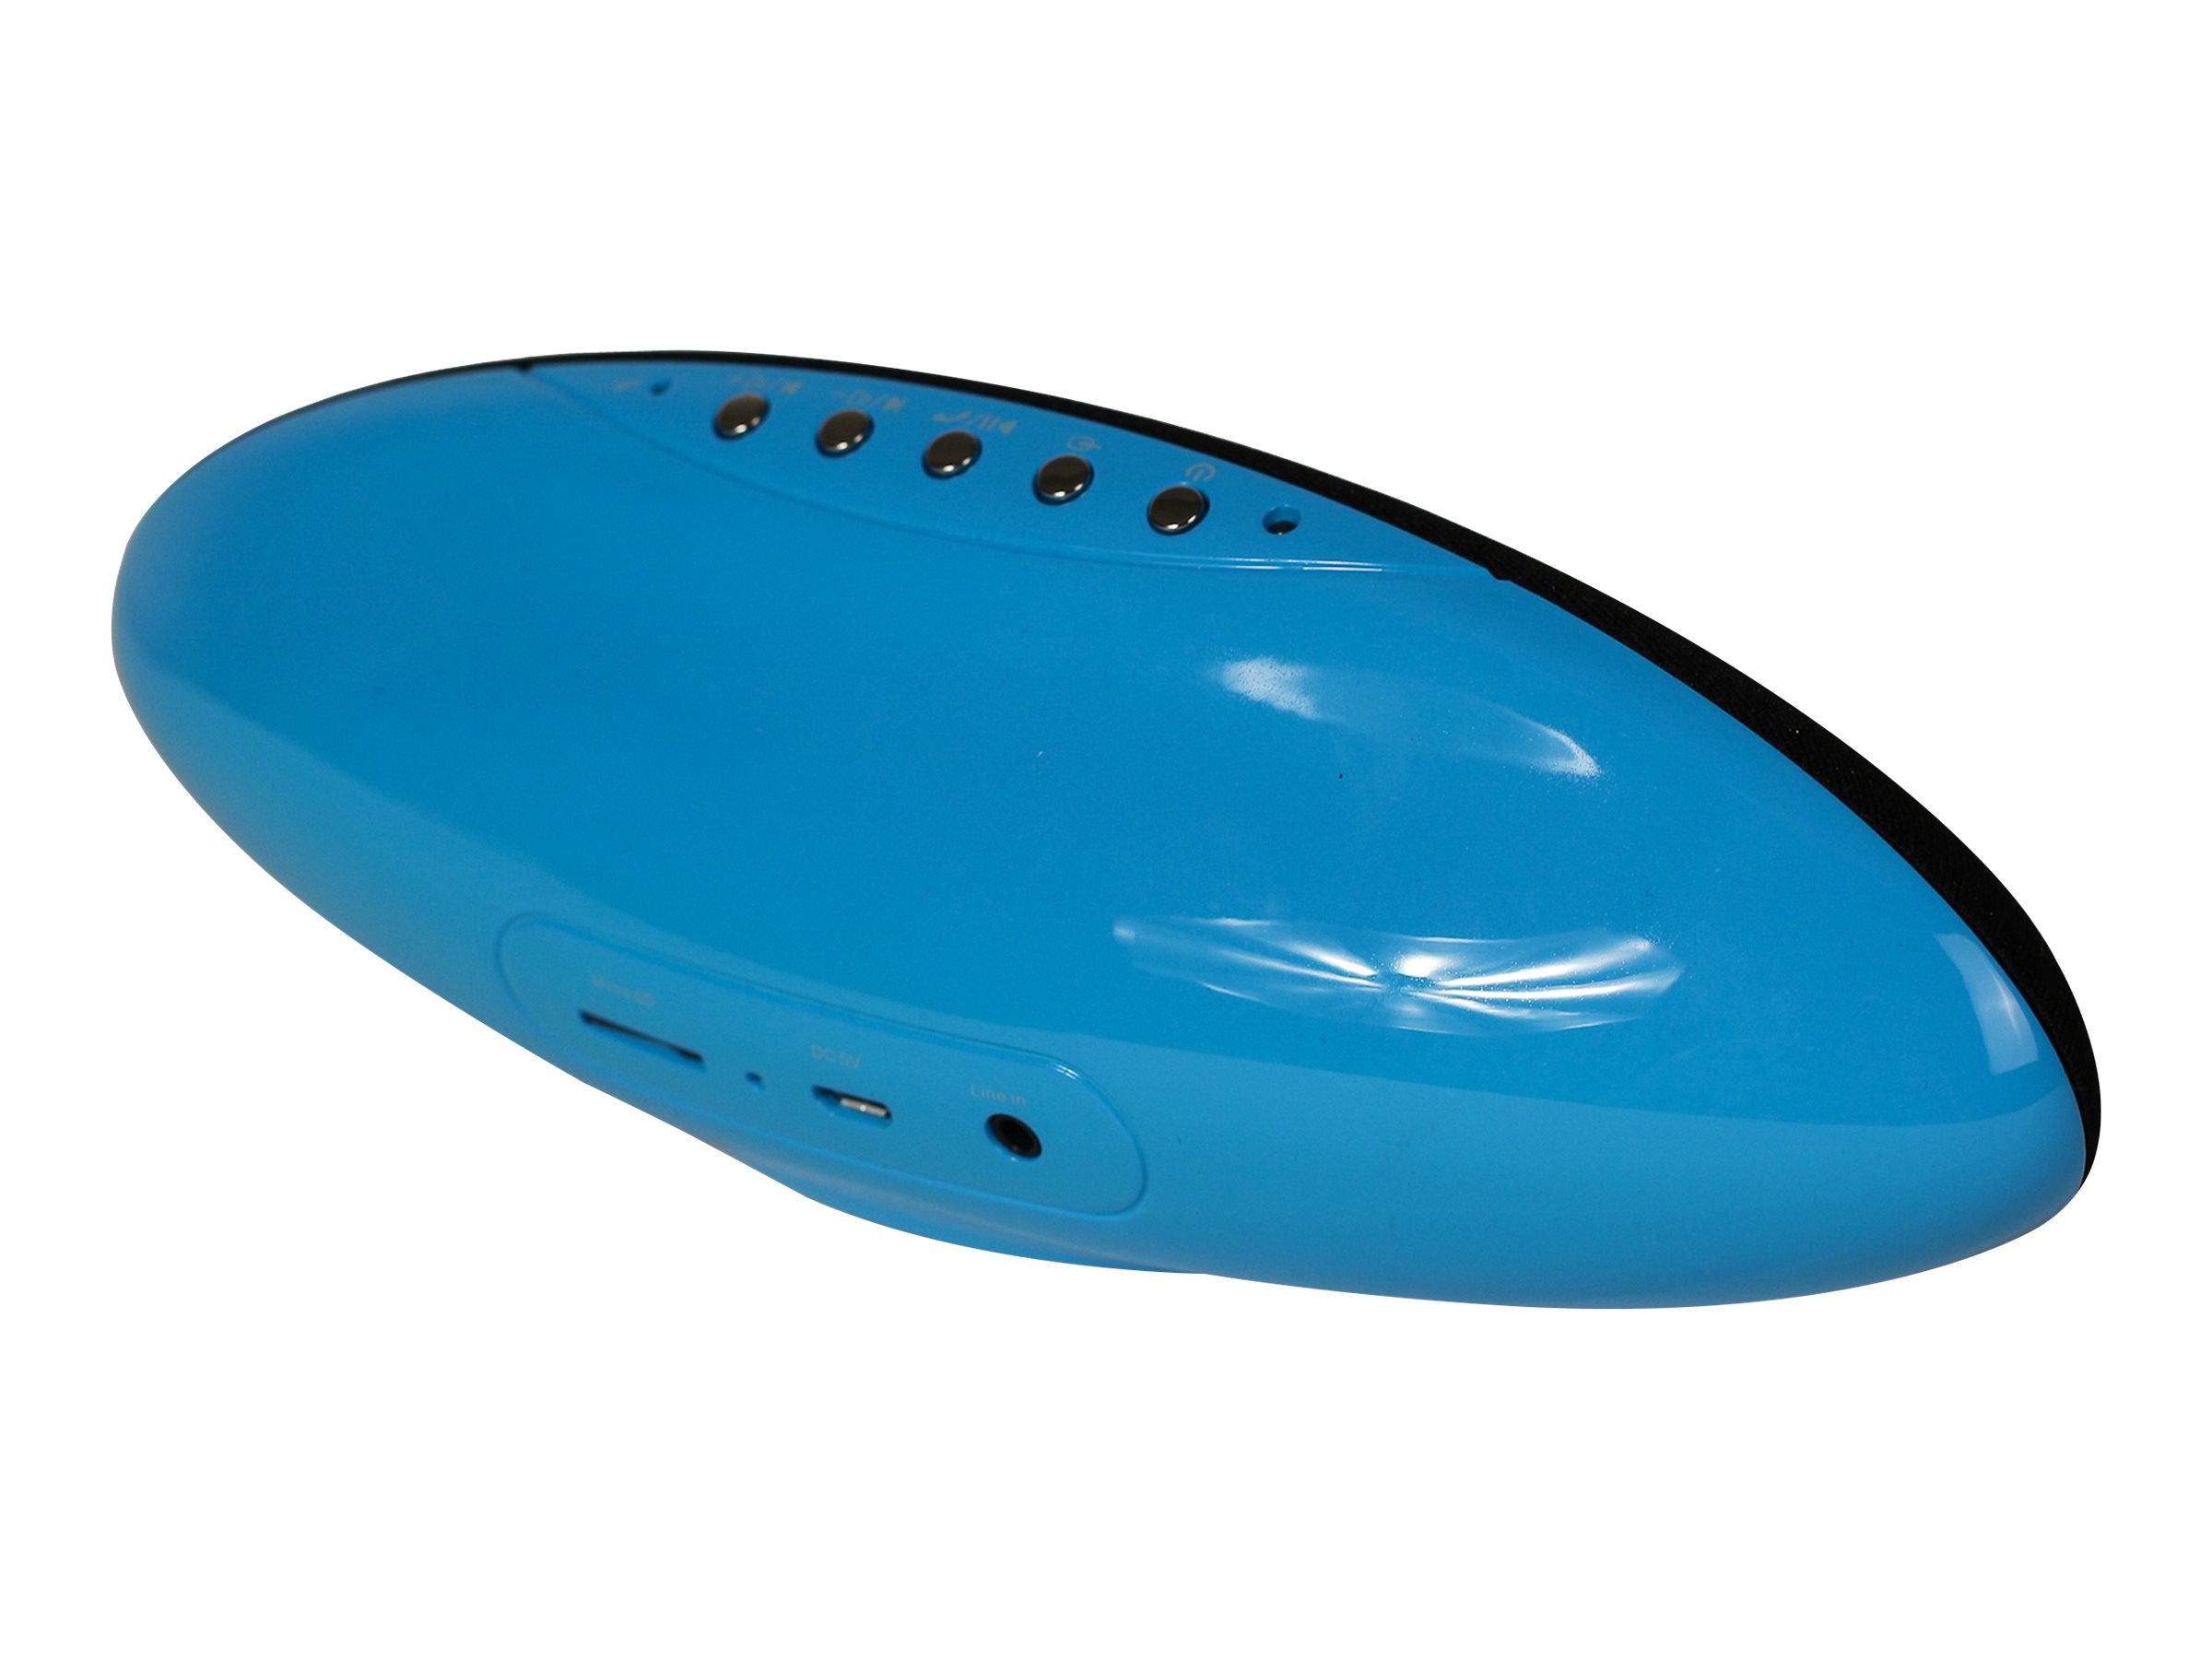 Sceptre Sound Pal Portable Bluetooth Speaker, Blue, SP05032L - image 3 of 5